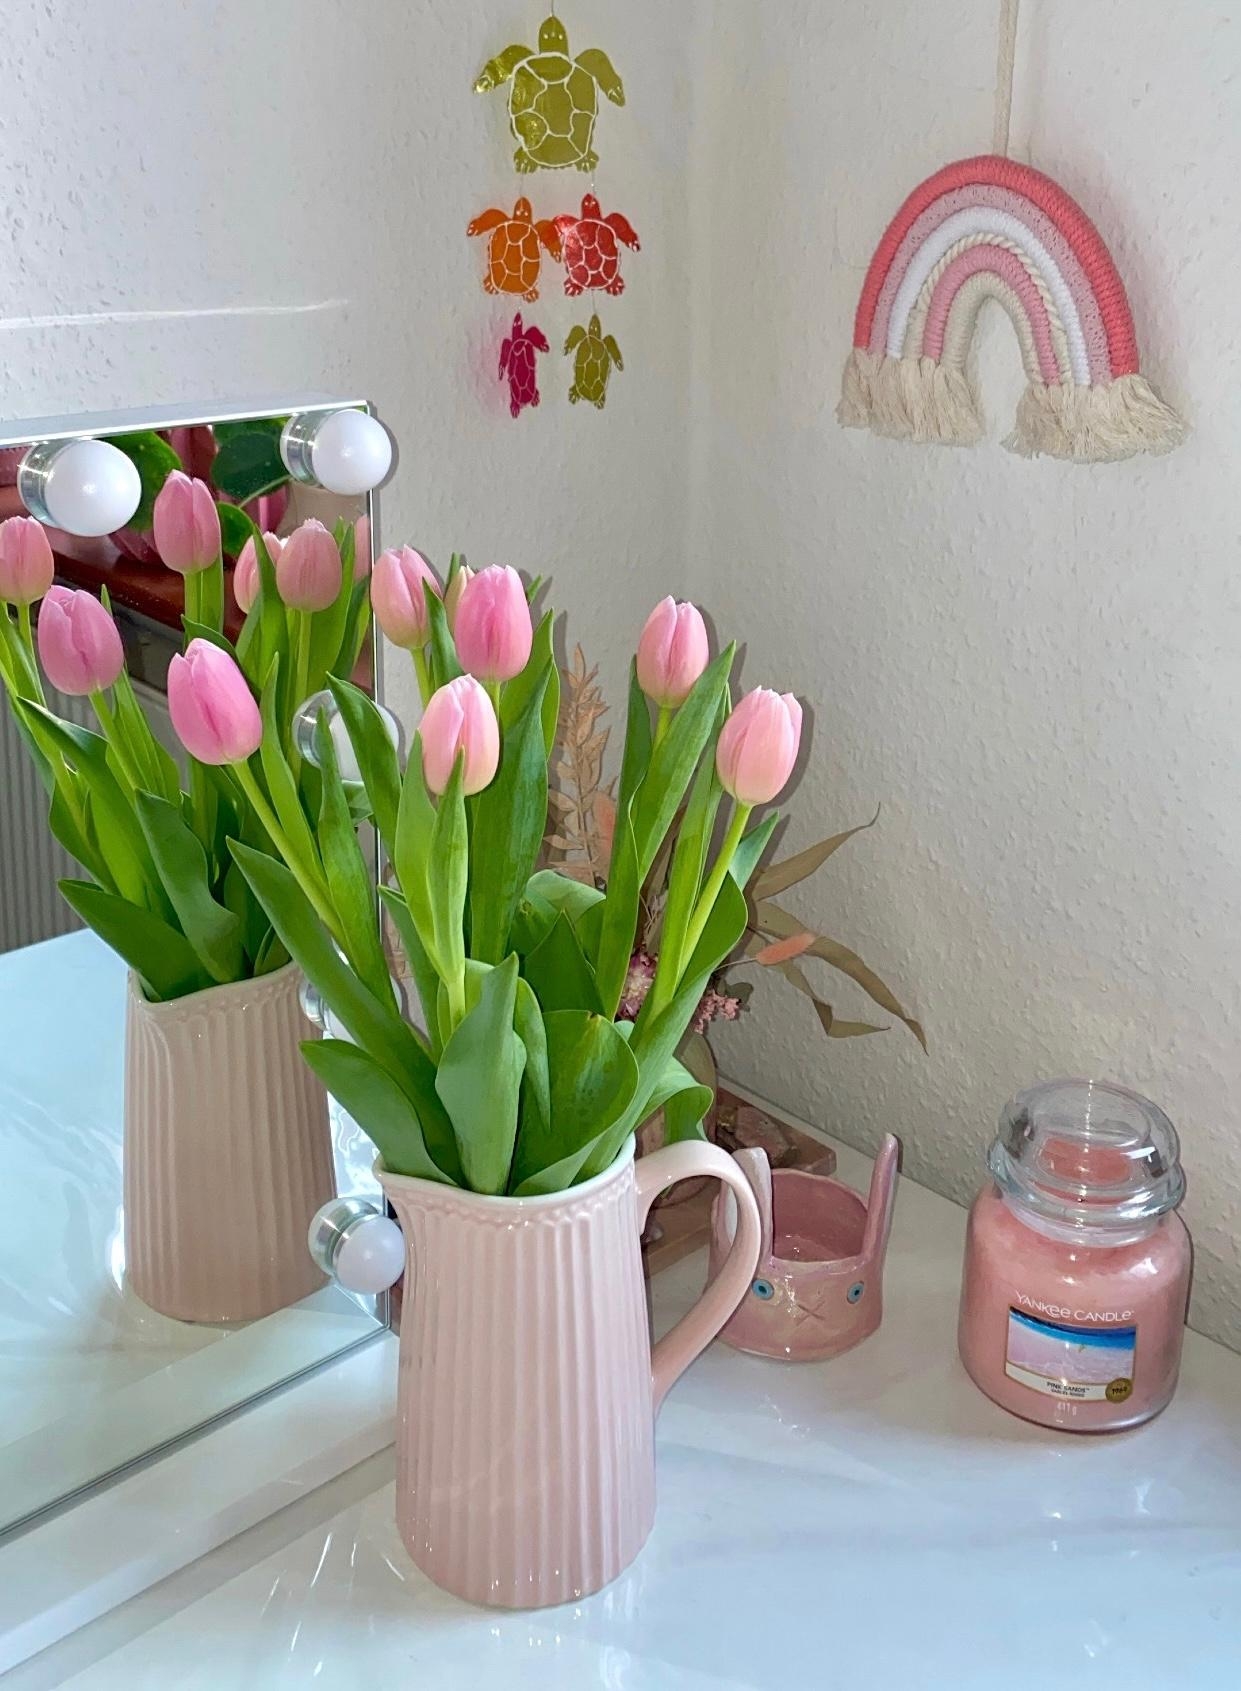 Zarte Frühlingsfarben 💕🌱
#deko #rosa #tulpen #wanddeko #frühling #dekoliebe #dekoration 